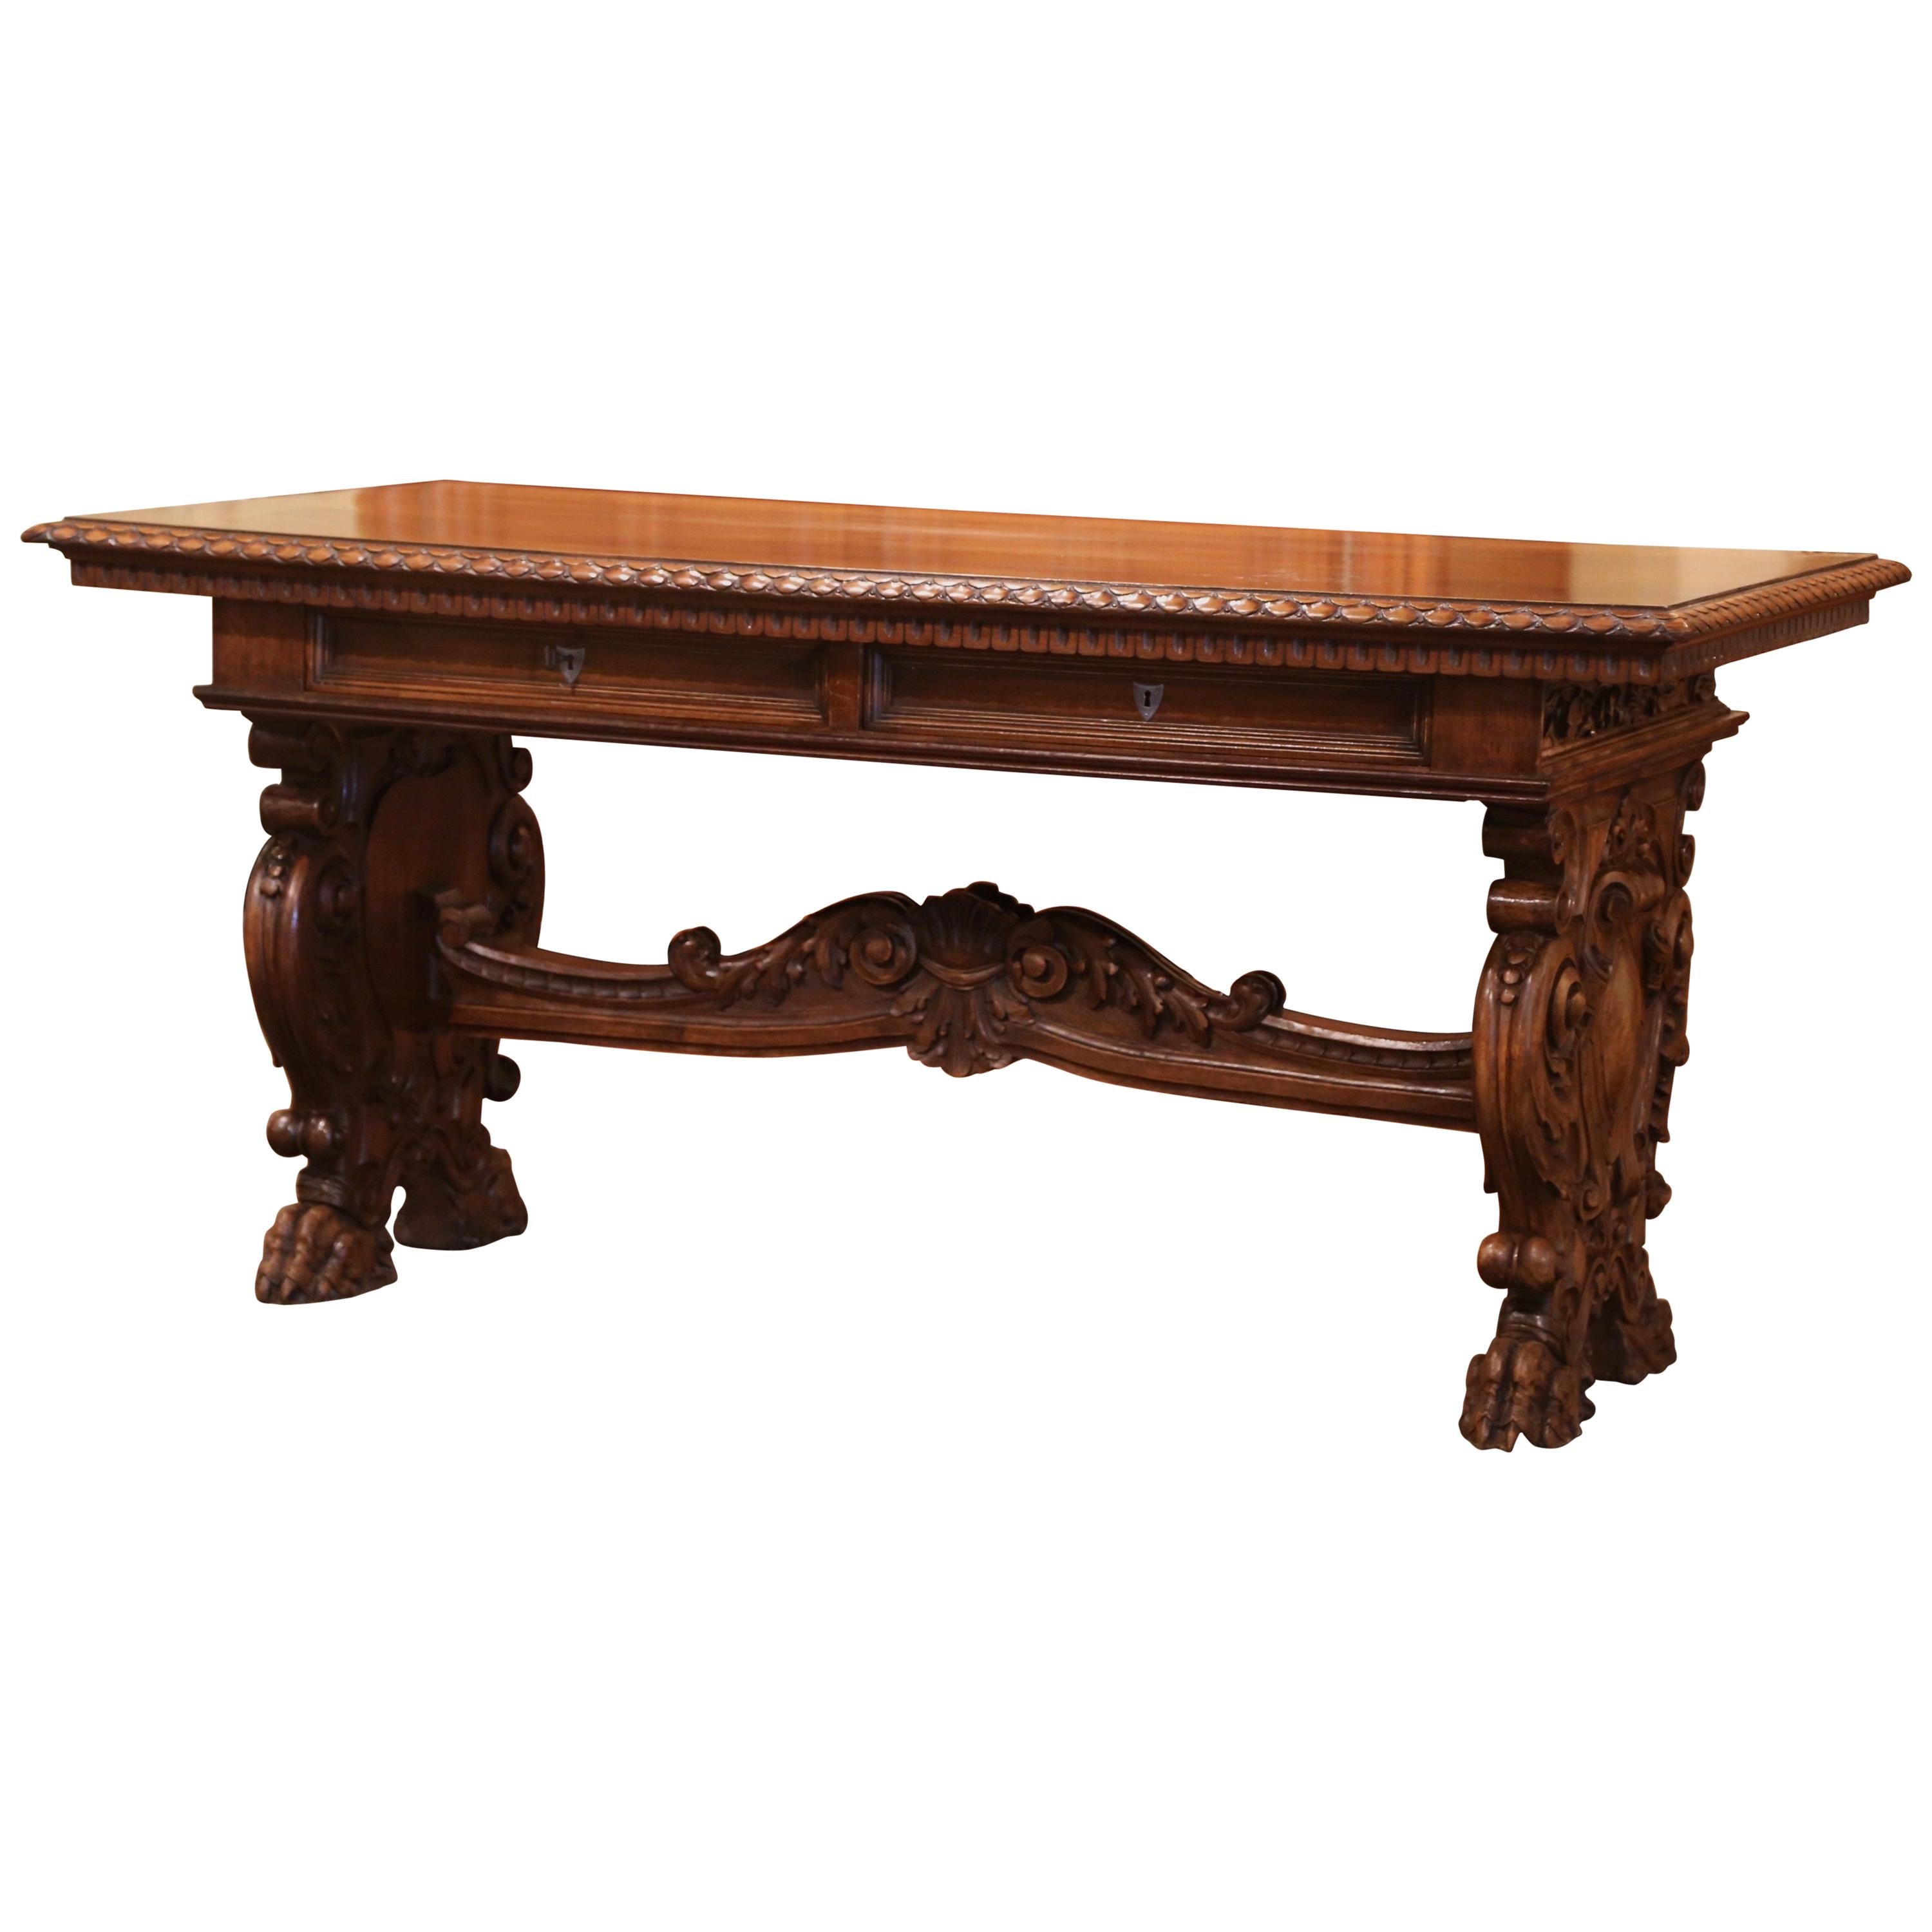 Mid-19th Century Italian Renaissance Revival Carved Walnut Writing Table Desk